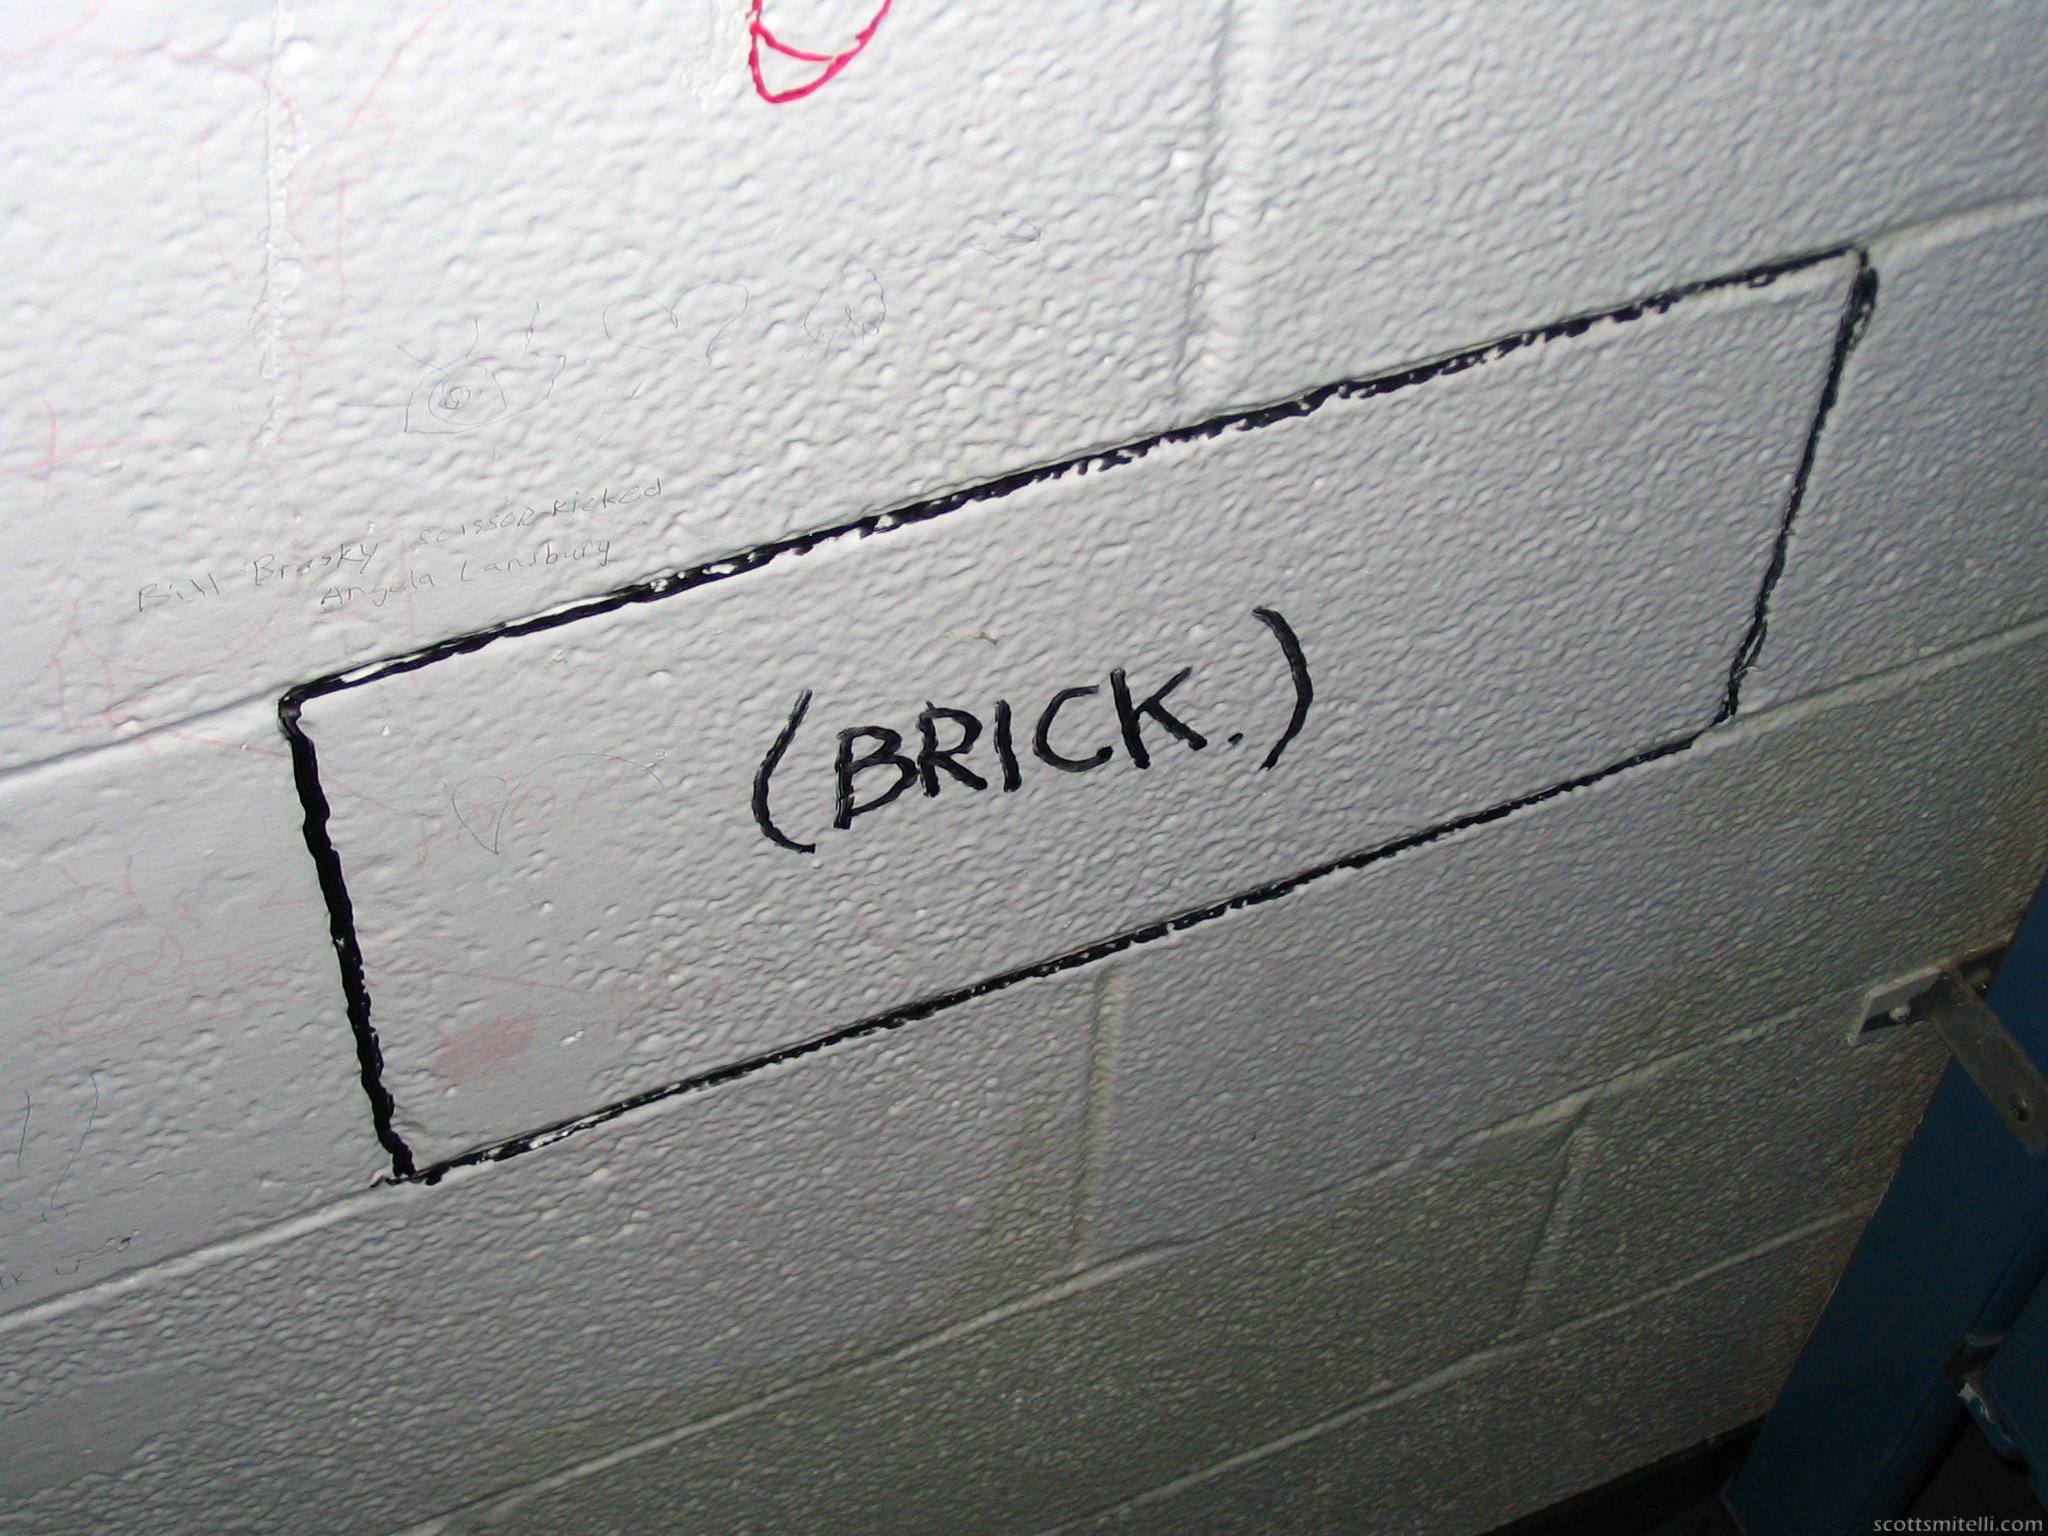 Brick.